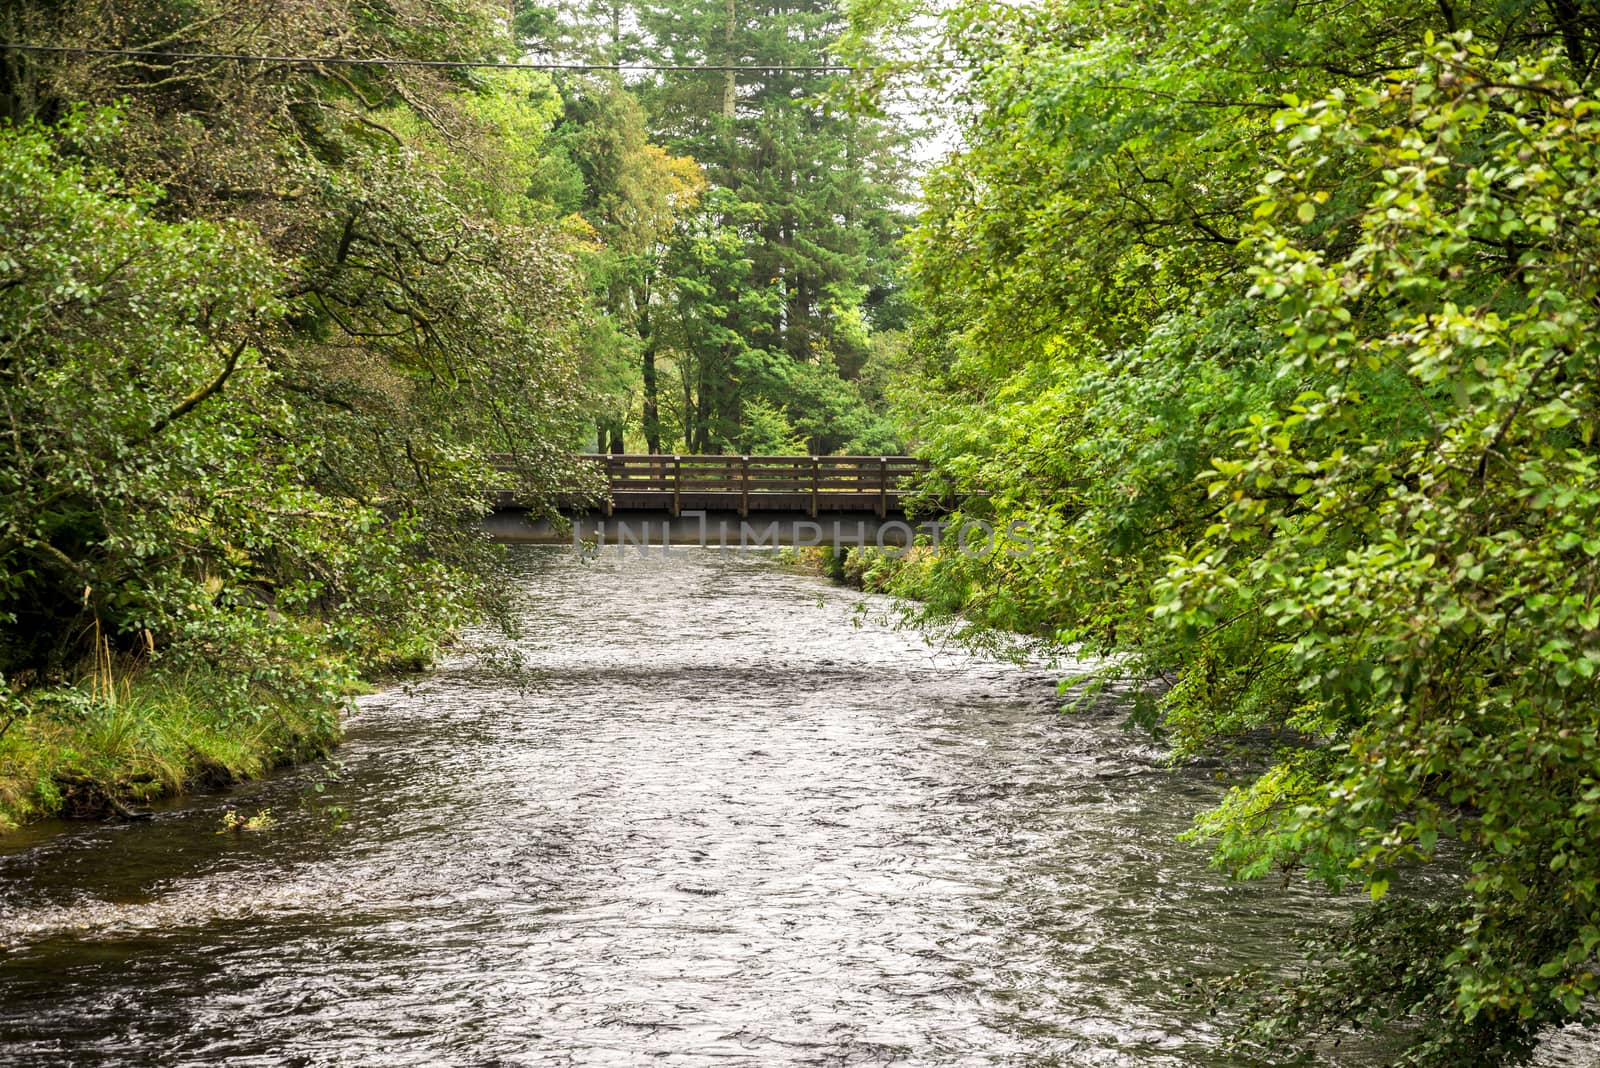 A small pedestrian bridge over river Eachaig in Benmore Botanic Garden, Loch Lomond and the Trossachs National Park, Scotland